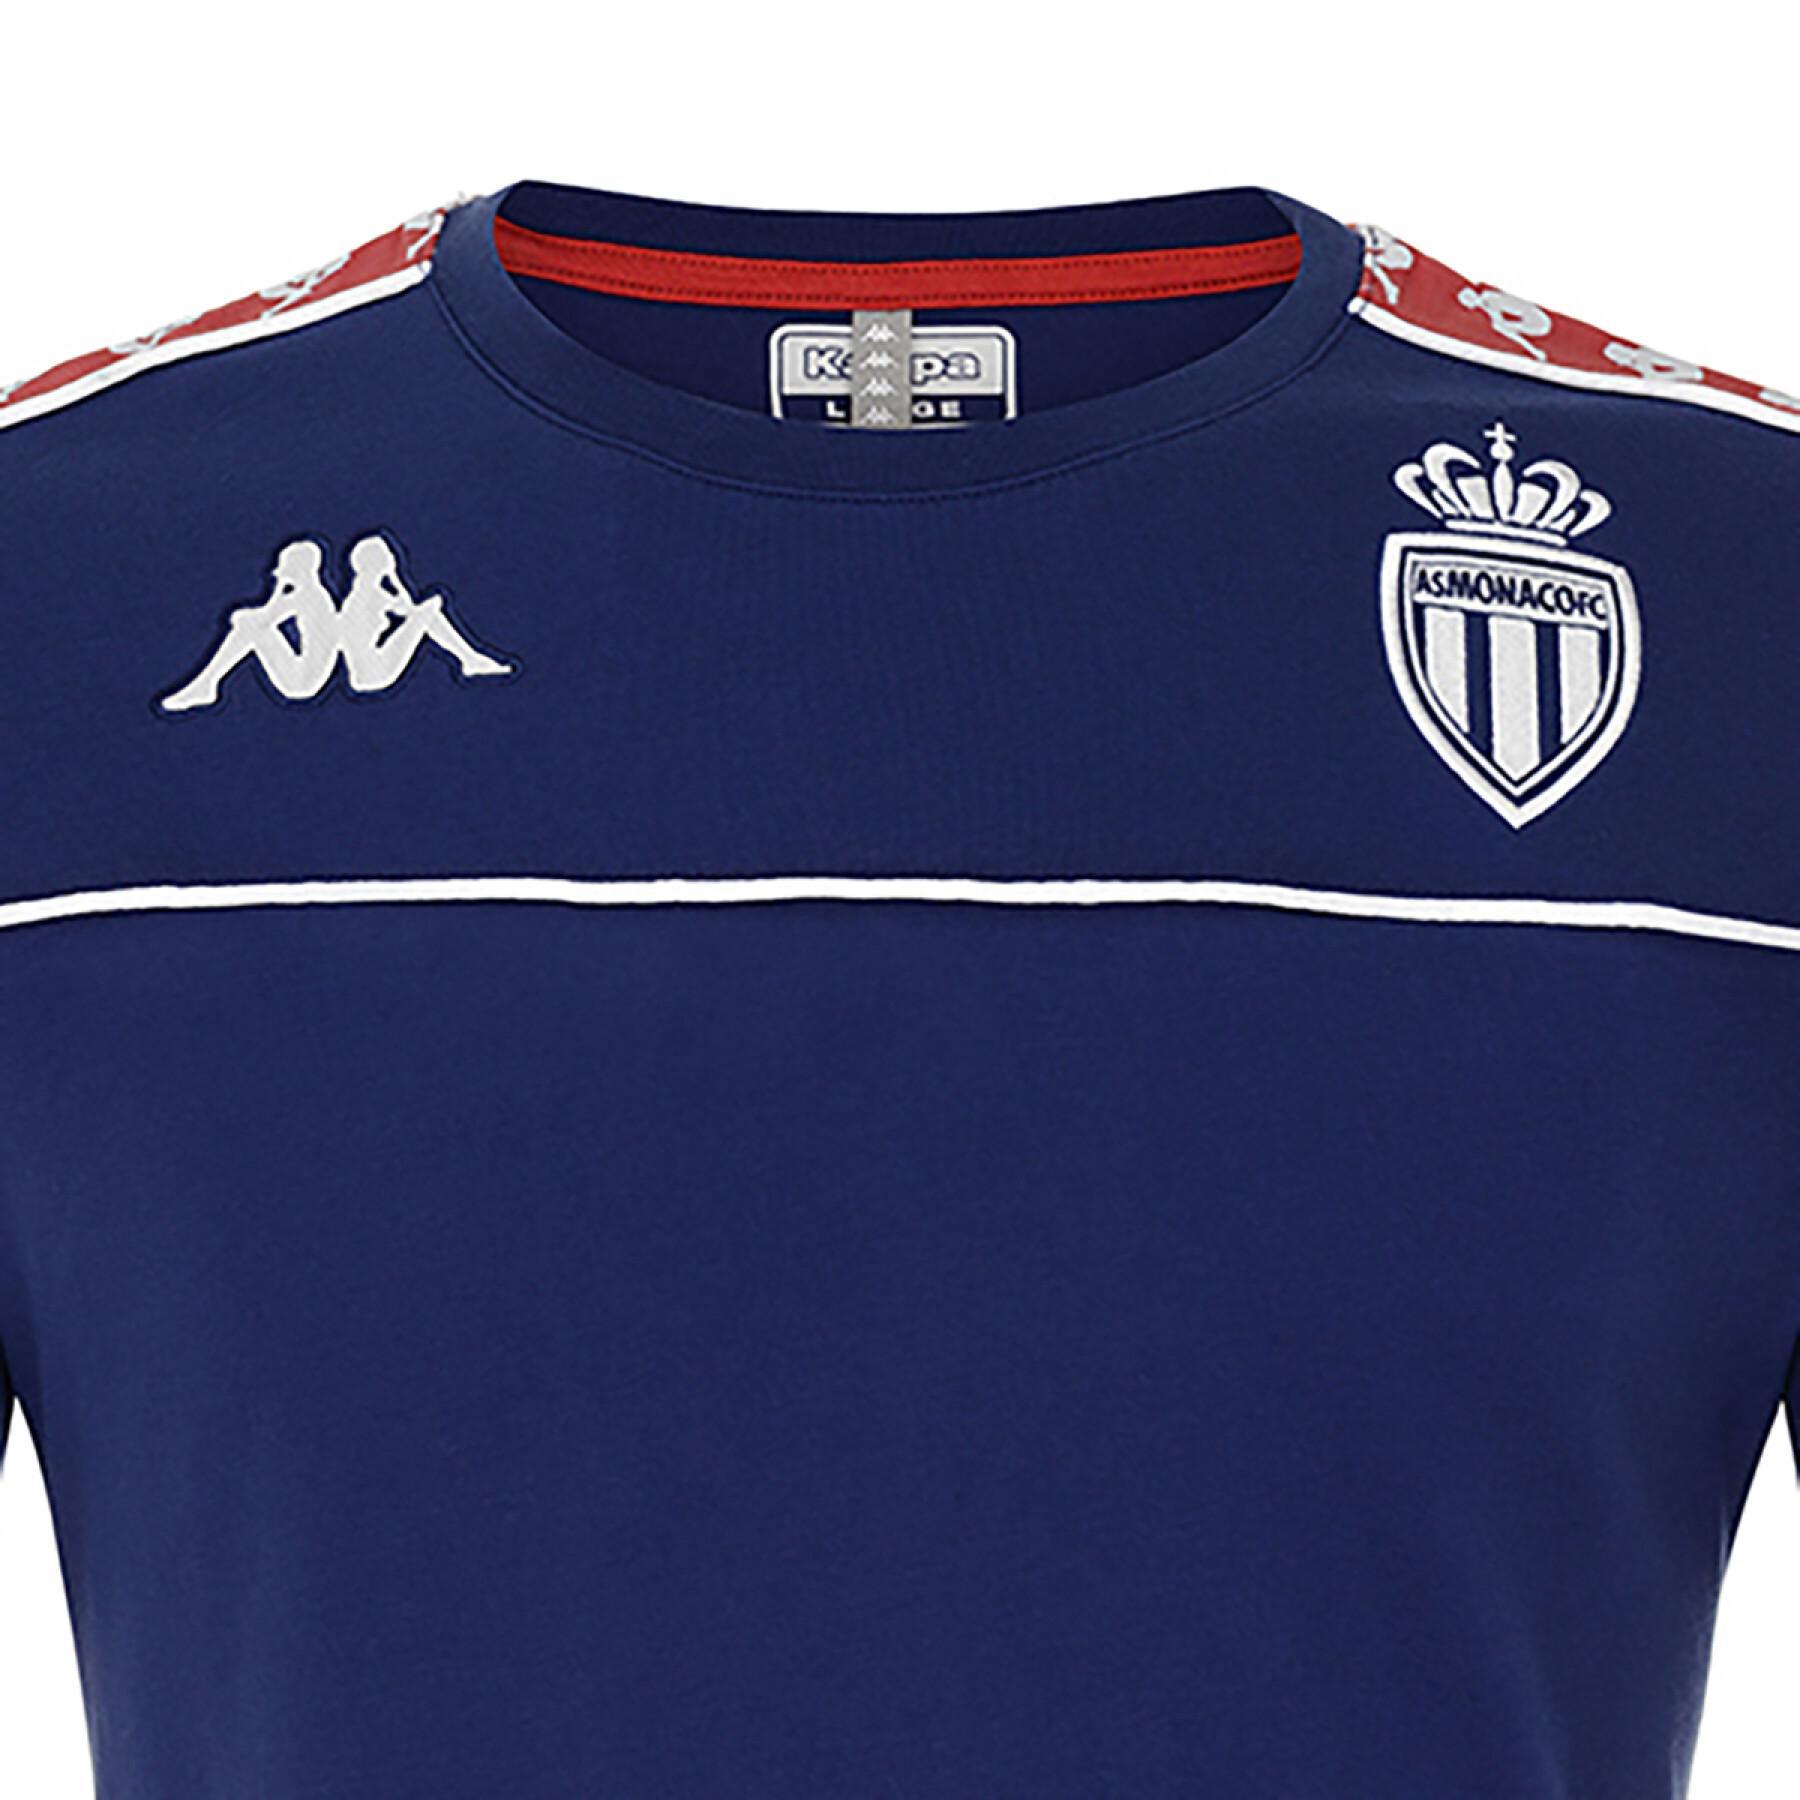 Child's T-shirt AS Monaco 2021/22 222 banda arari slim